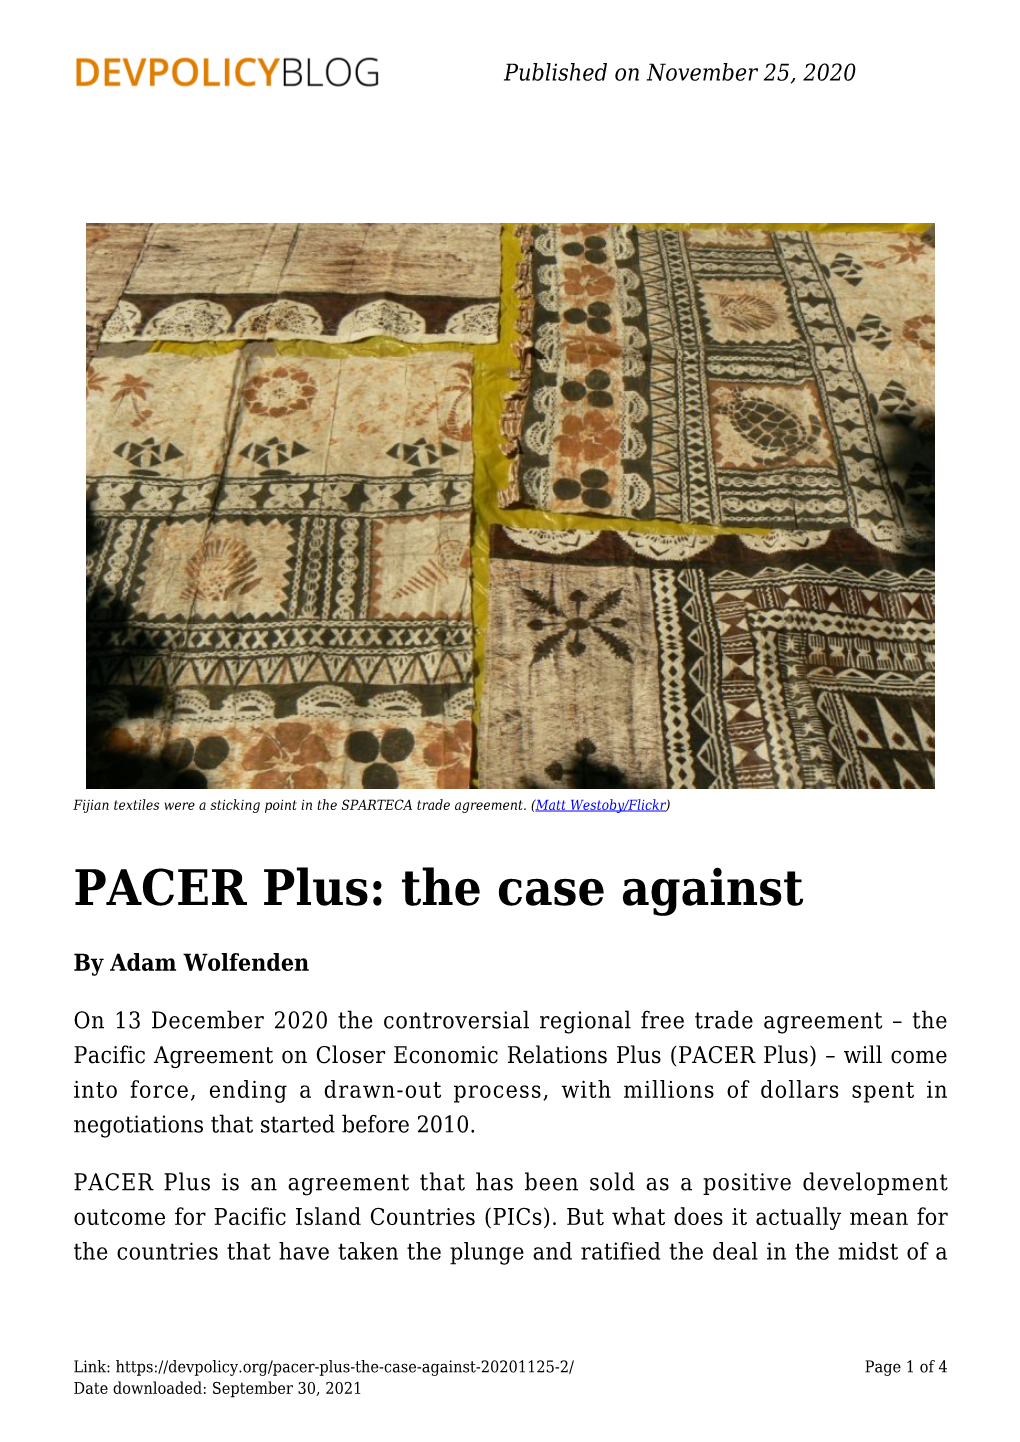 PACER Plus: the Case Against